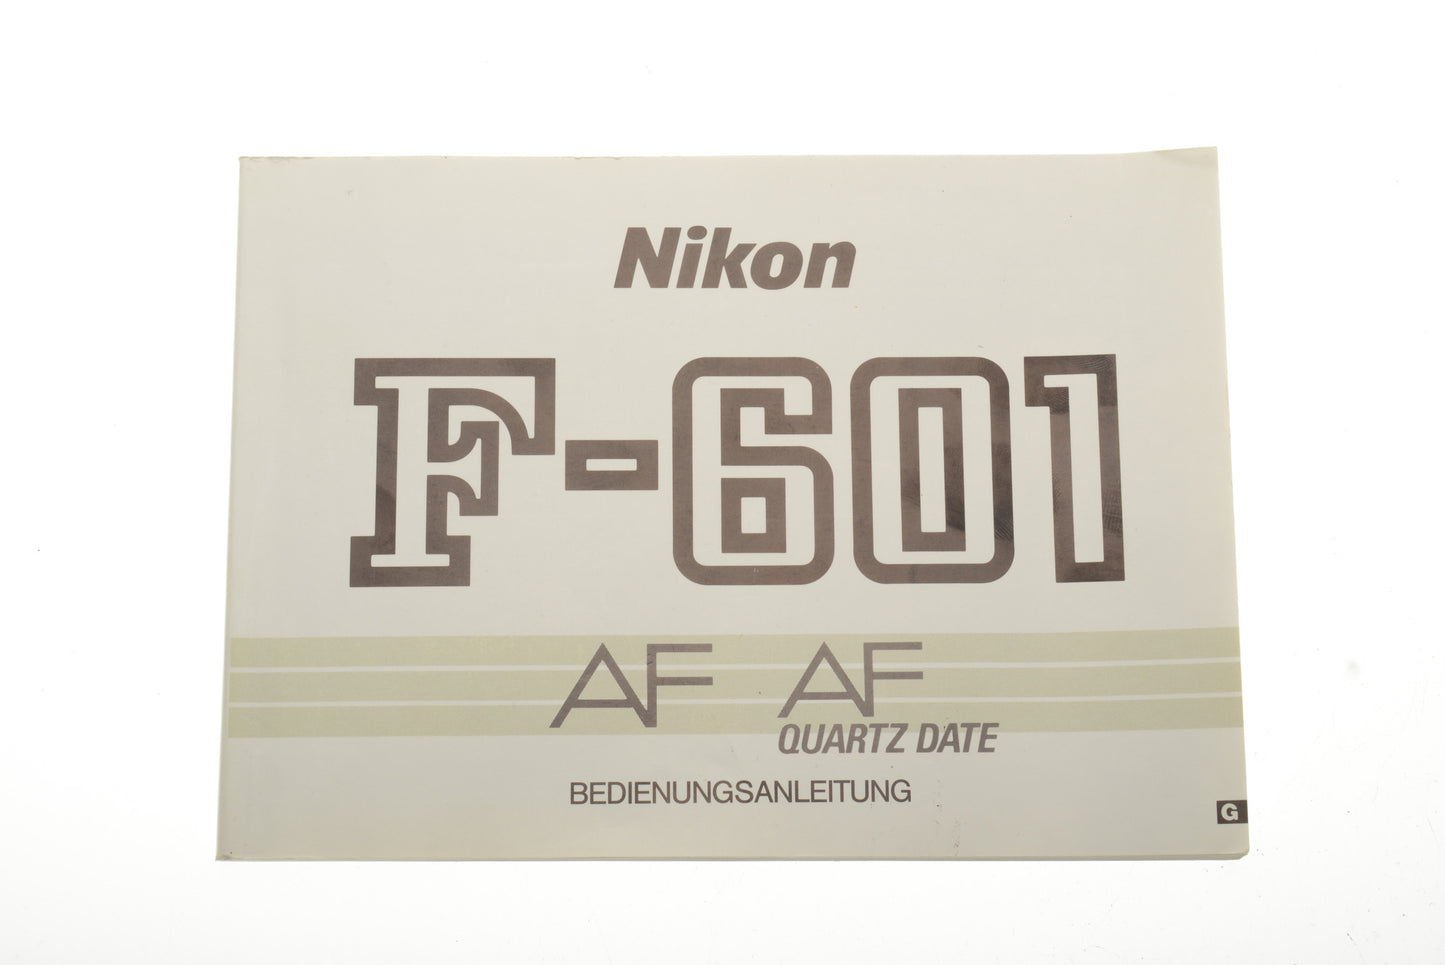 Nikon F-601 AF Quartz Date Bedienunsanleitung - Accessory